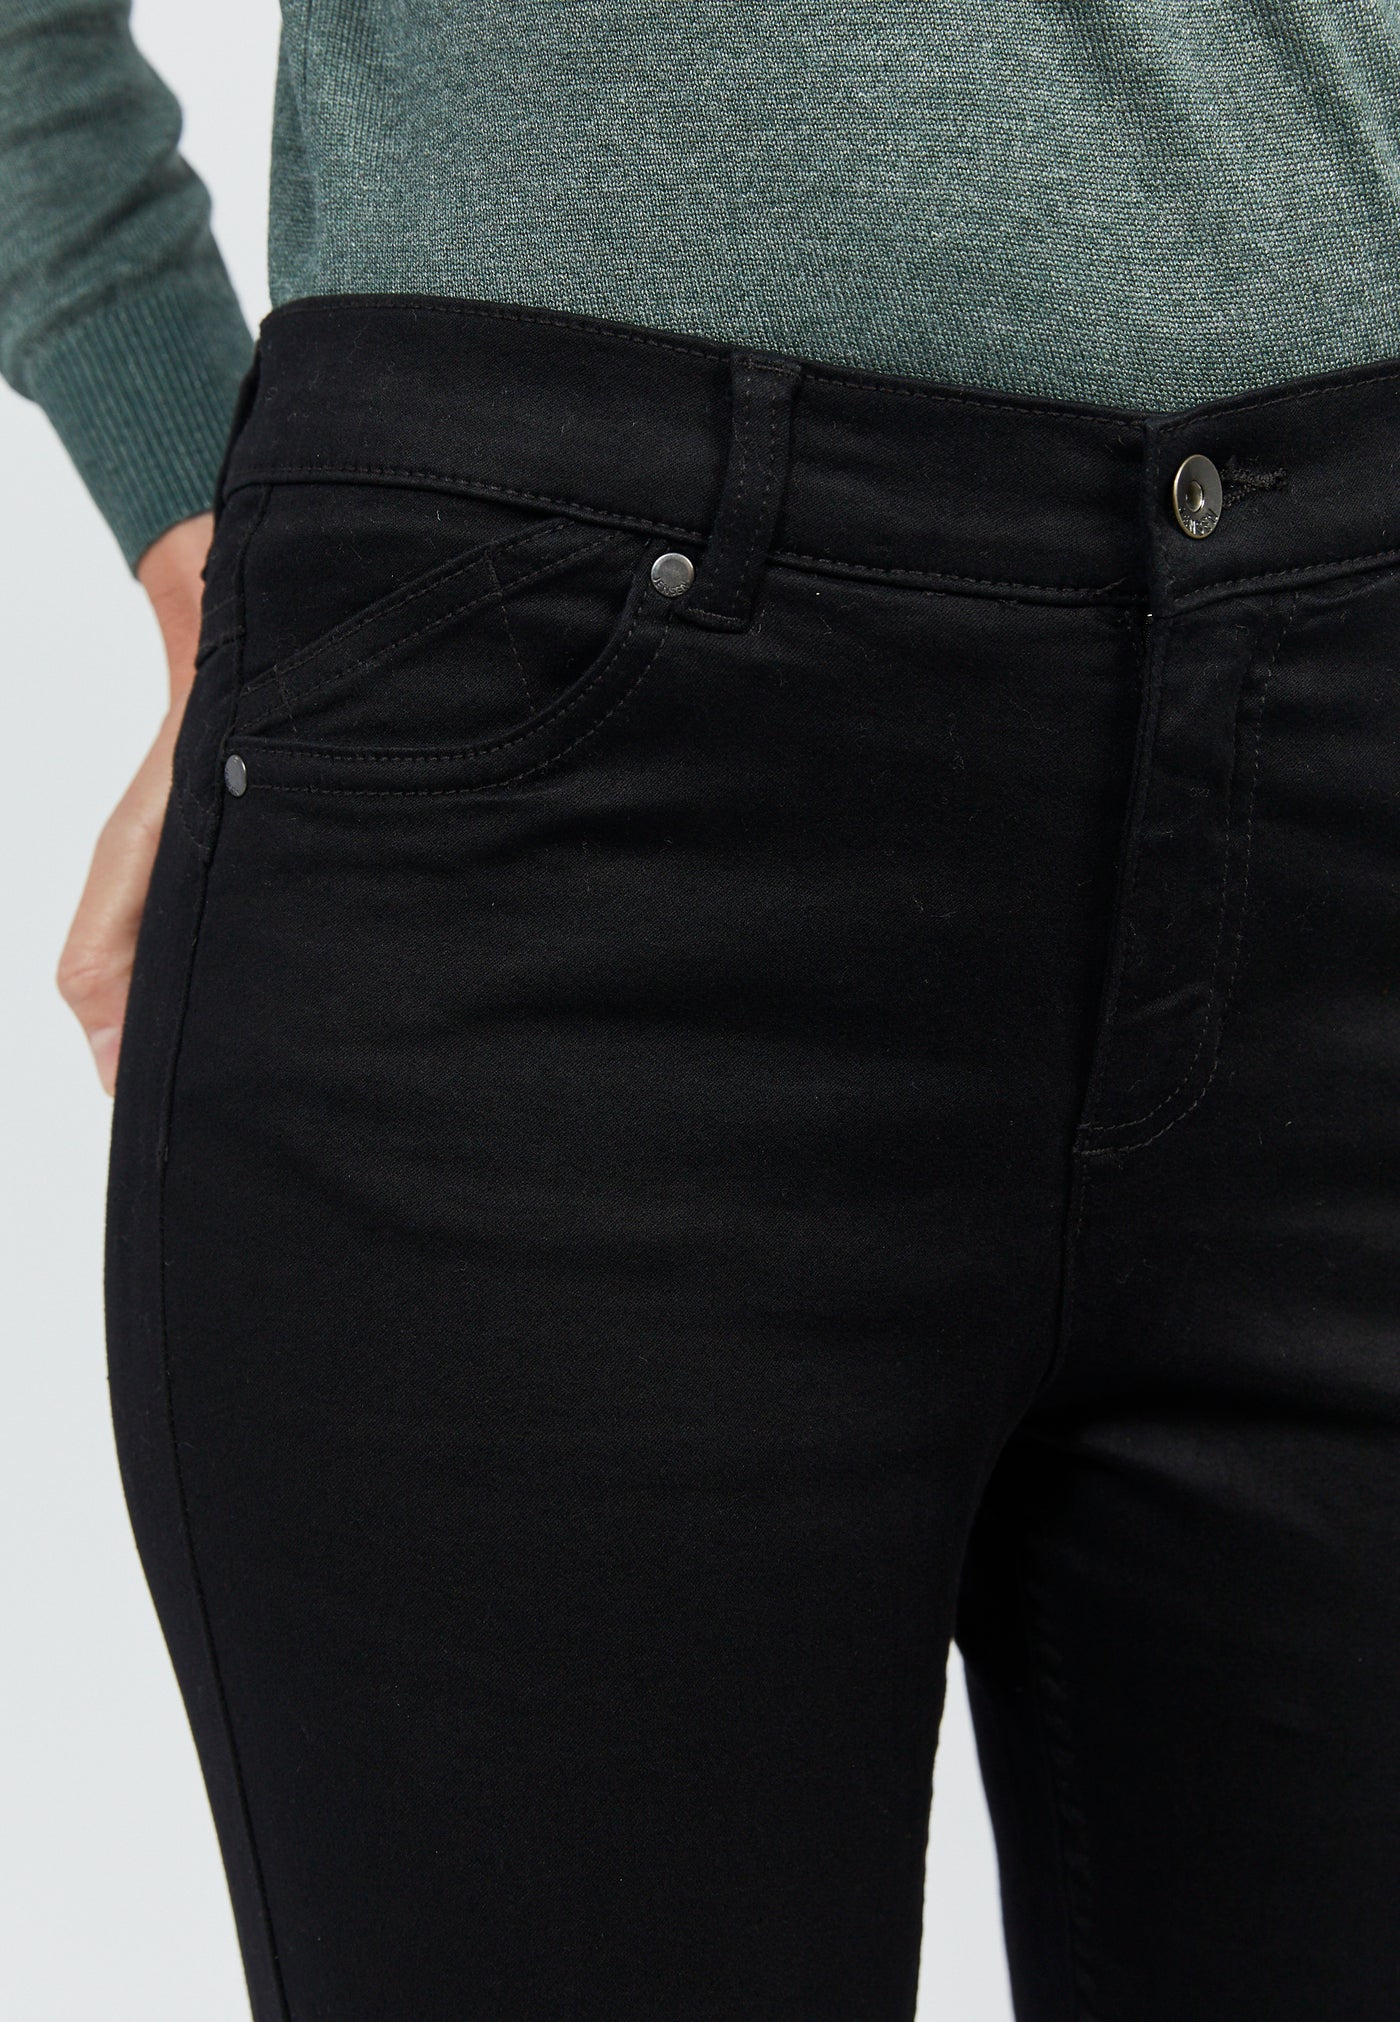 Jeans, Model - Black tone in tone – Like